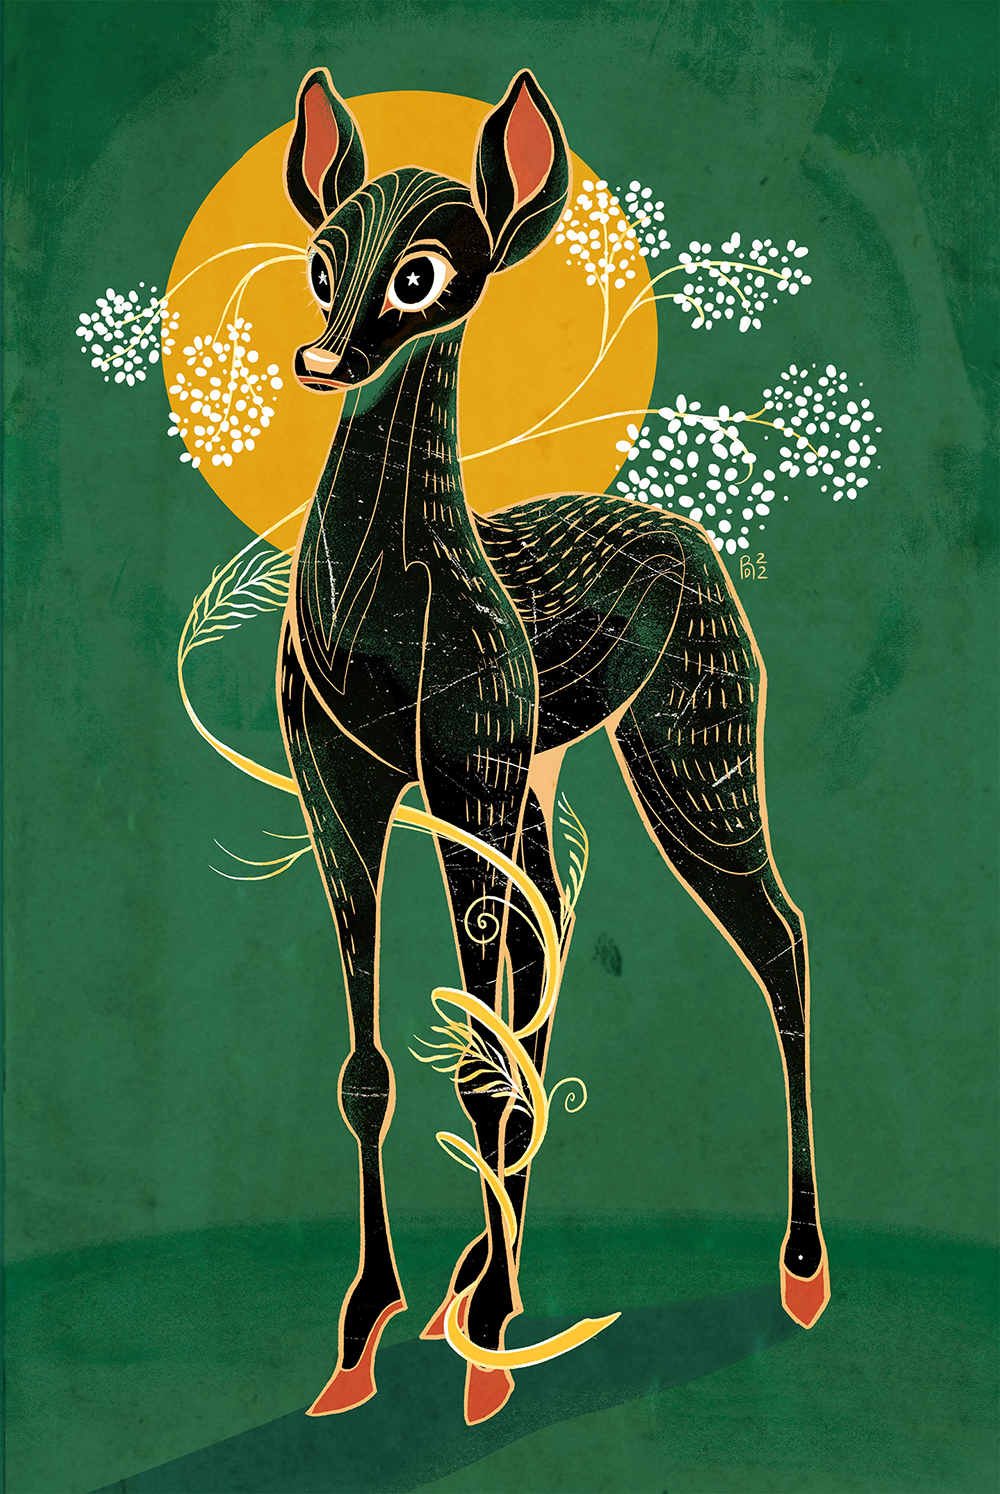 Black Deer with white flowers illustration